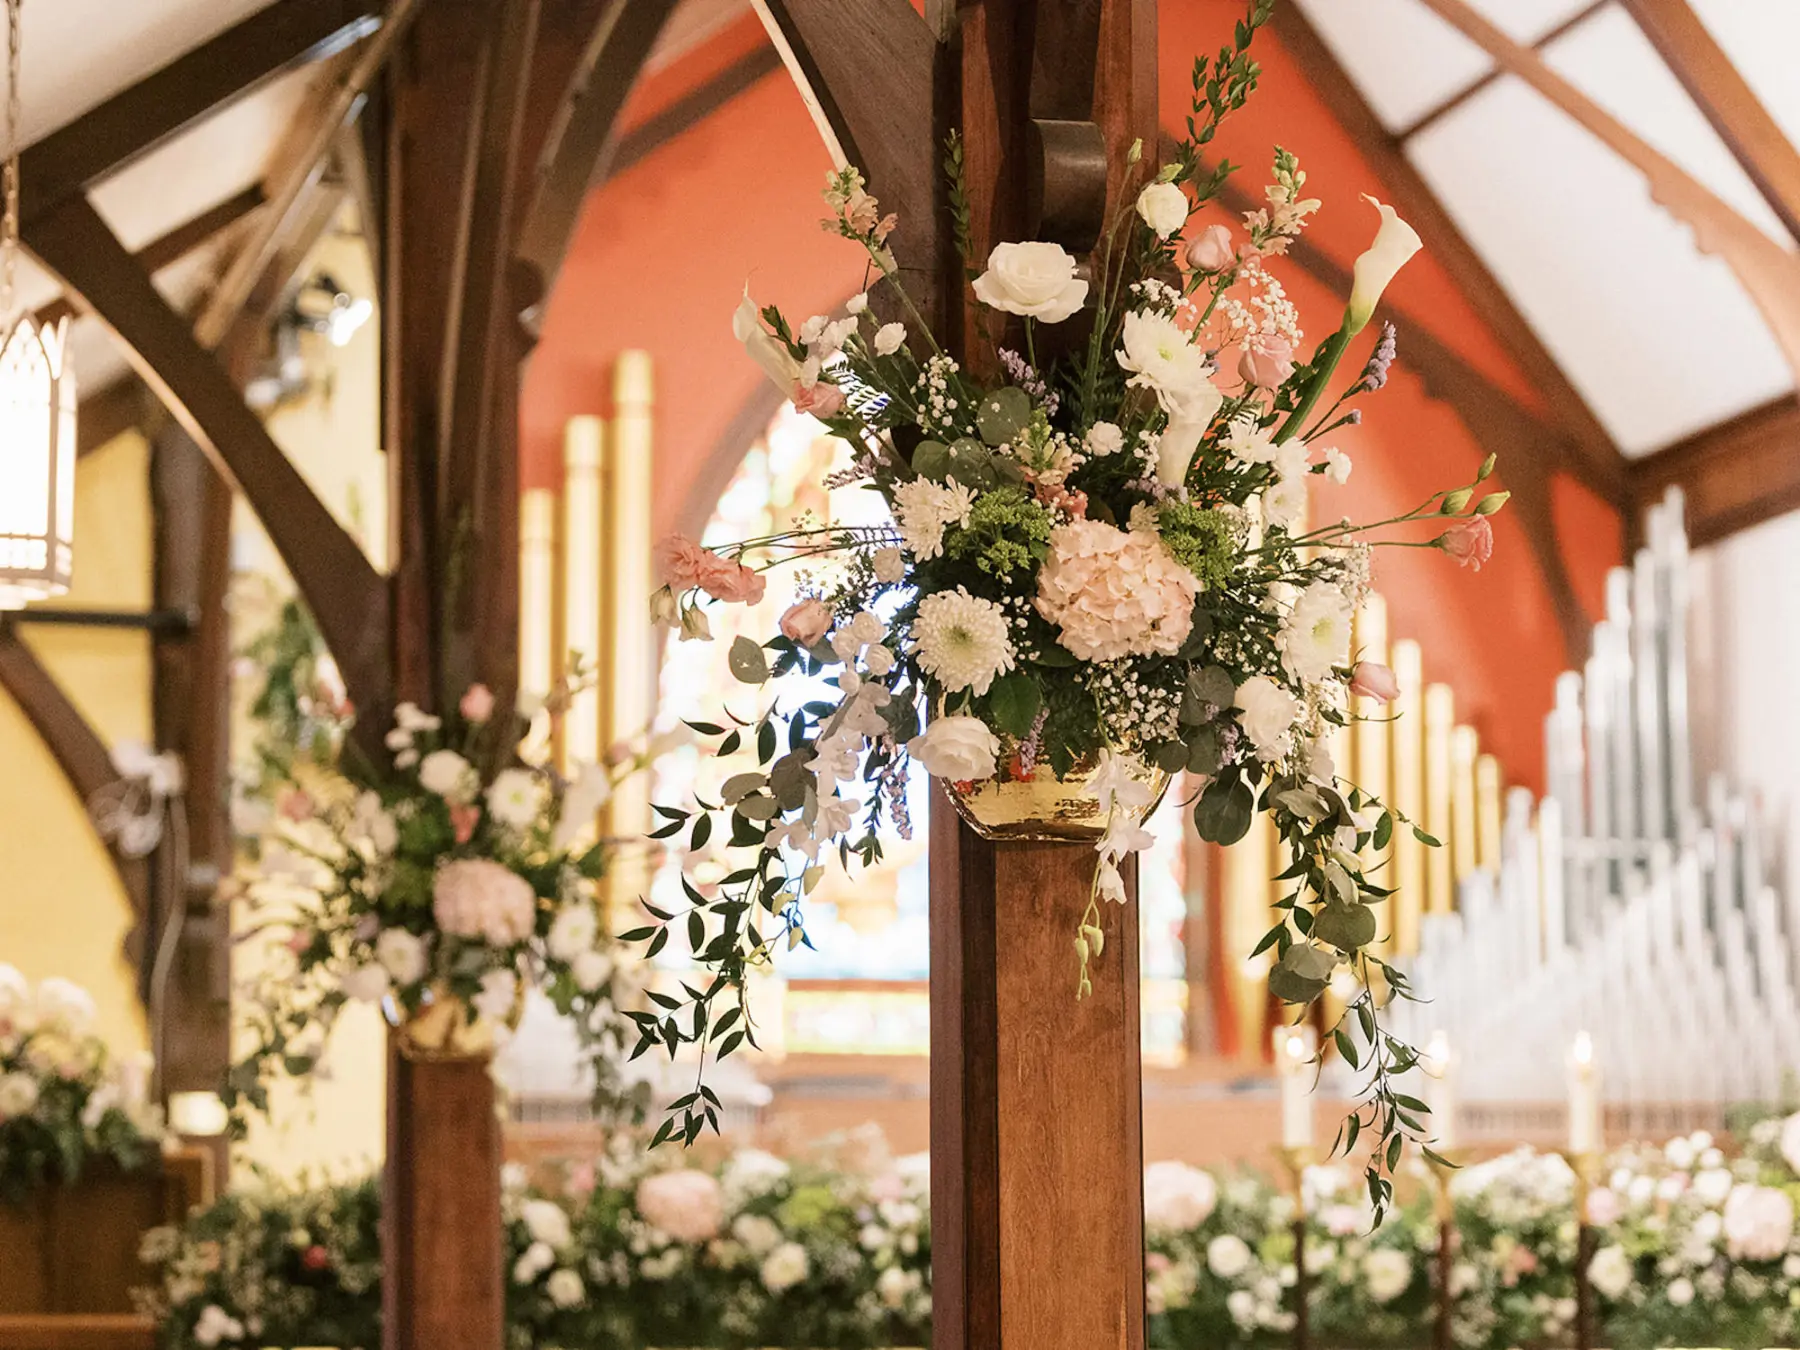 Episcopal Church Wedding Ceremony Column Decor Ideas | White Daisy, Roses, Calla Lily, Hydrangea, Baby's Breath, and Greenery Floral Arrangement Inspiration